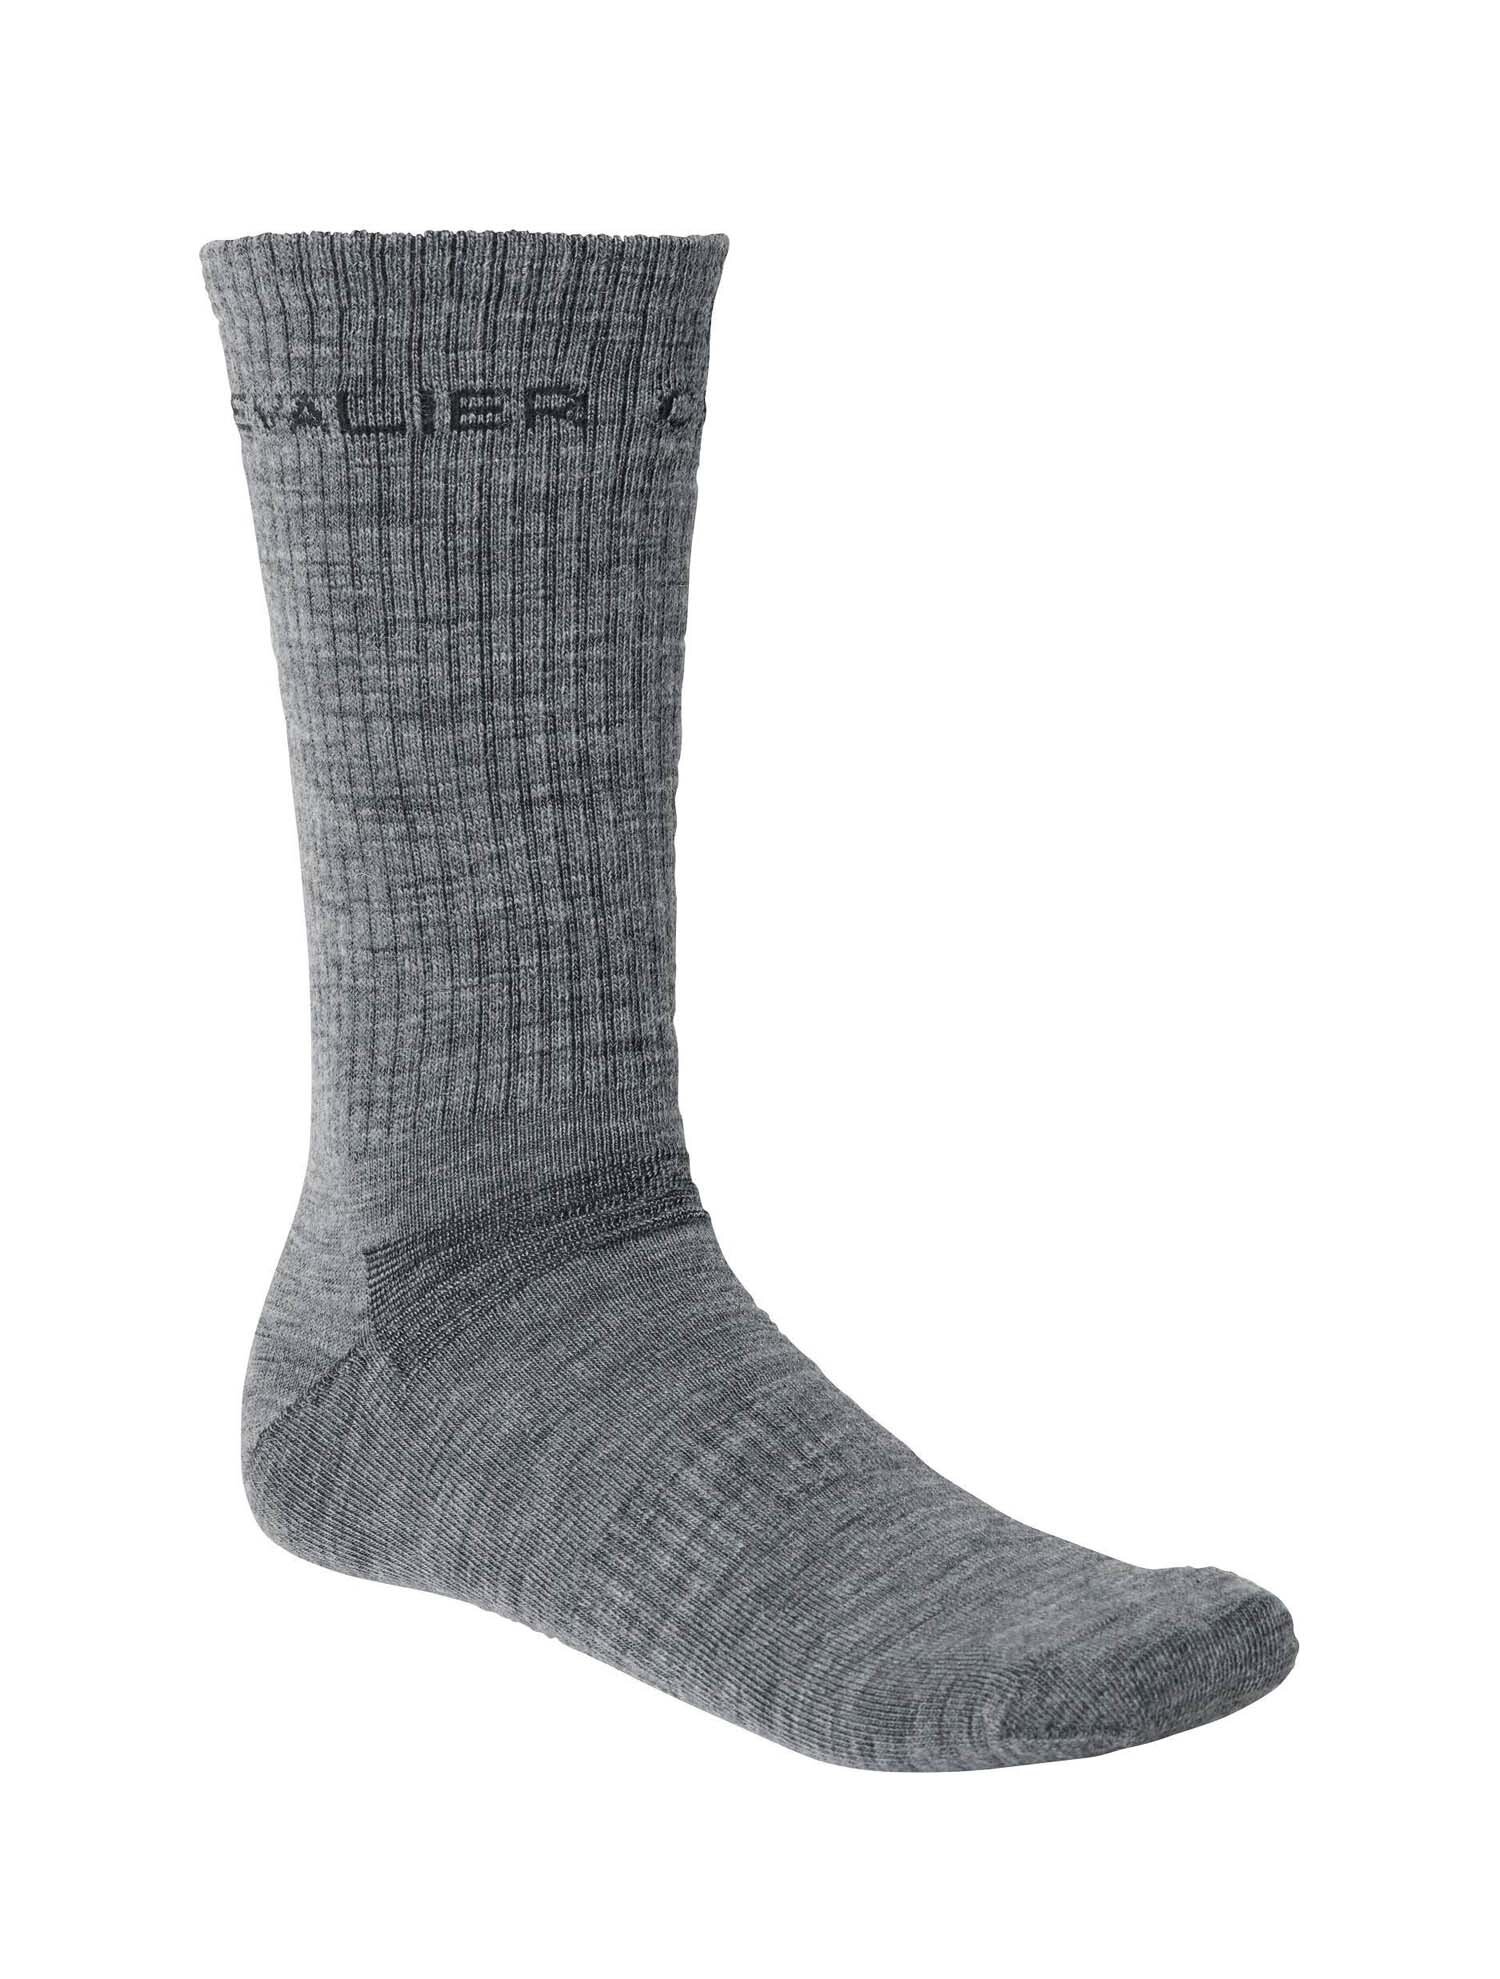 Liner Wool Socks - Chevalier